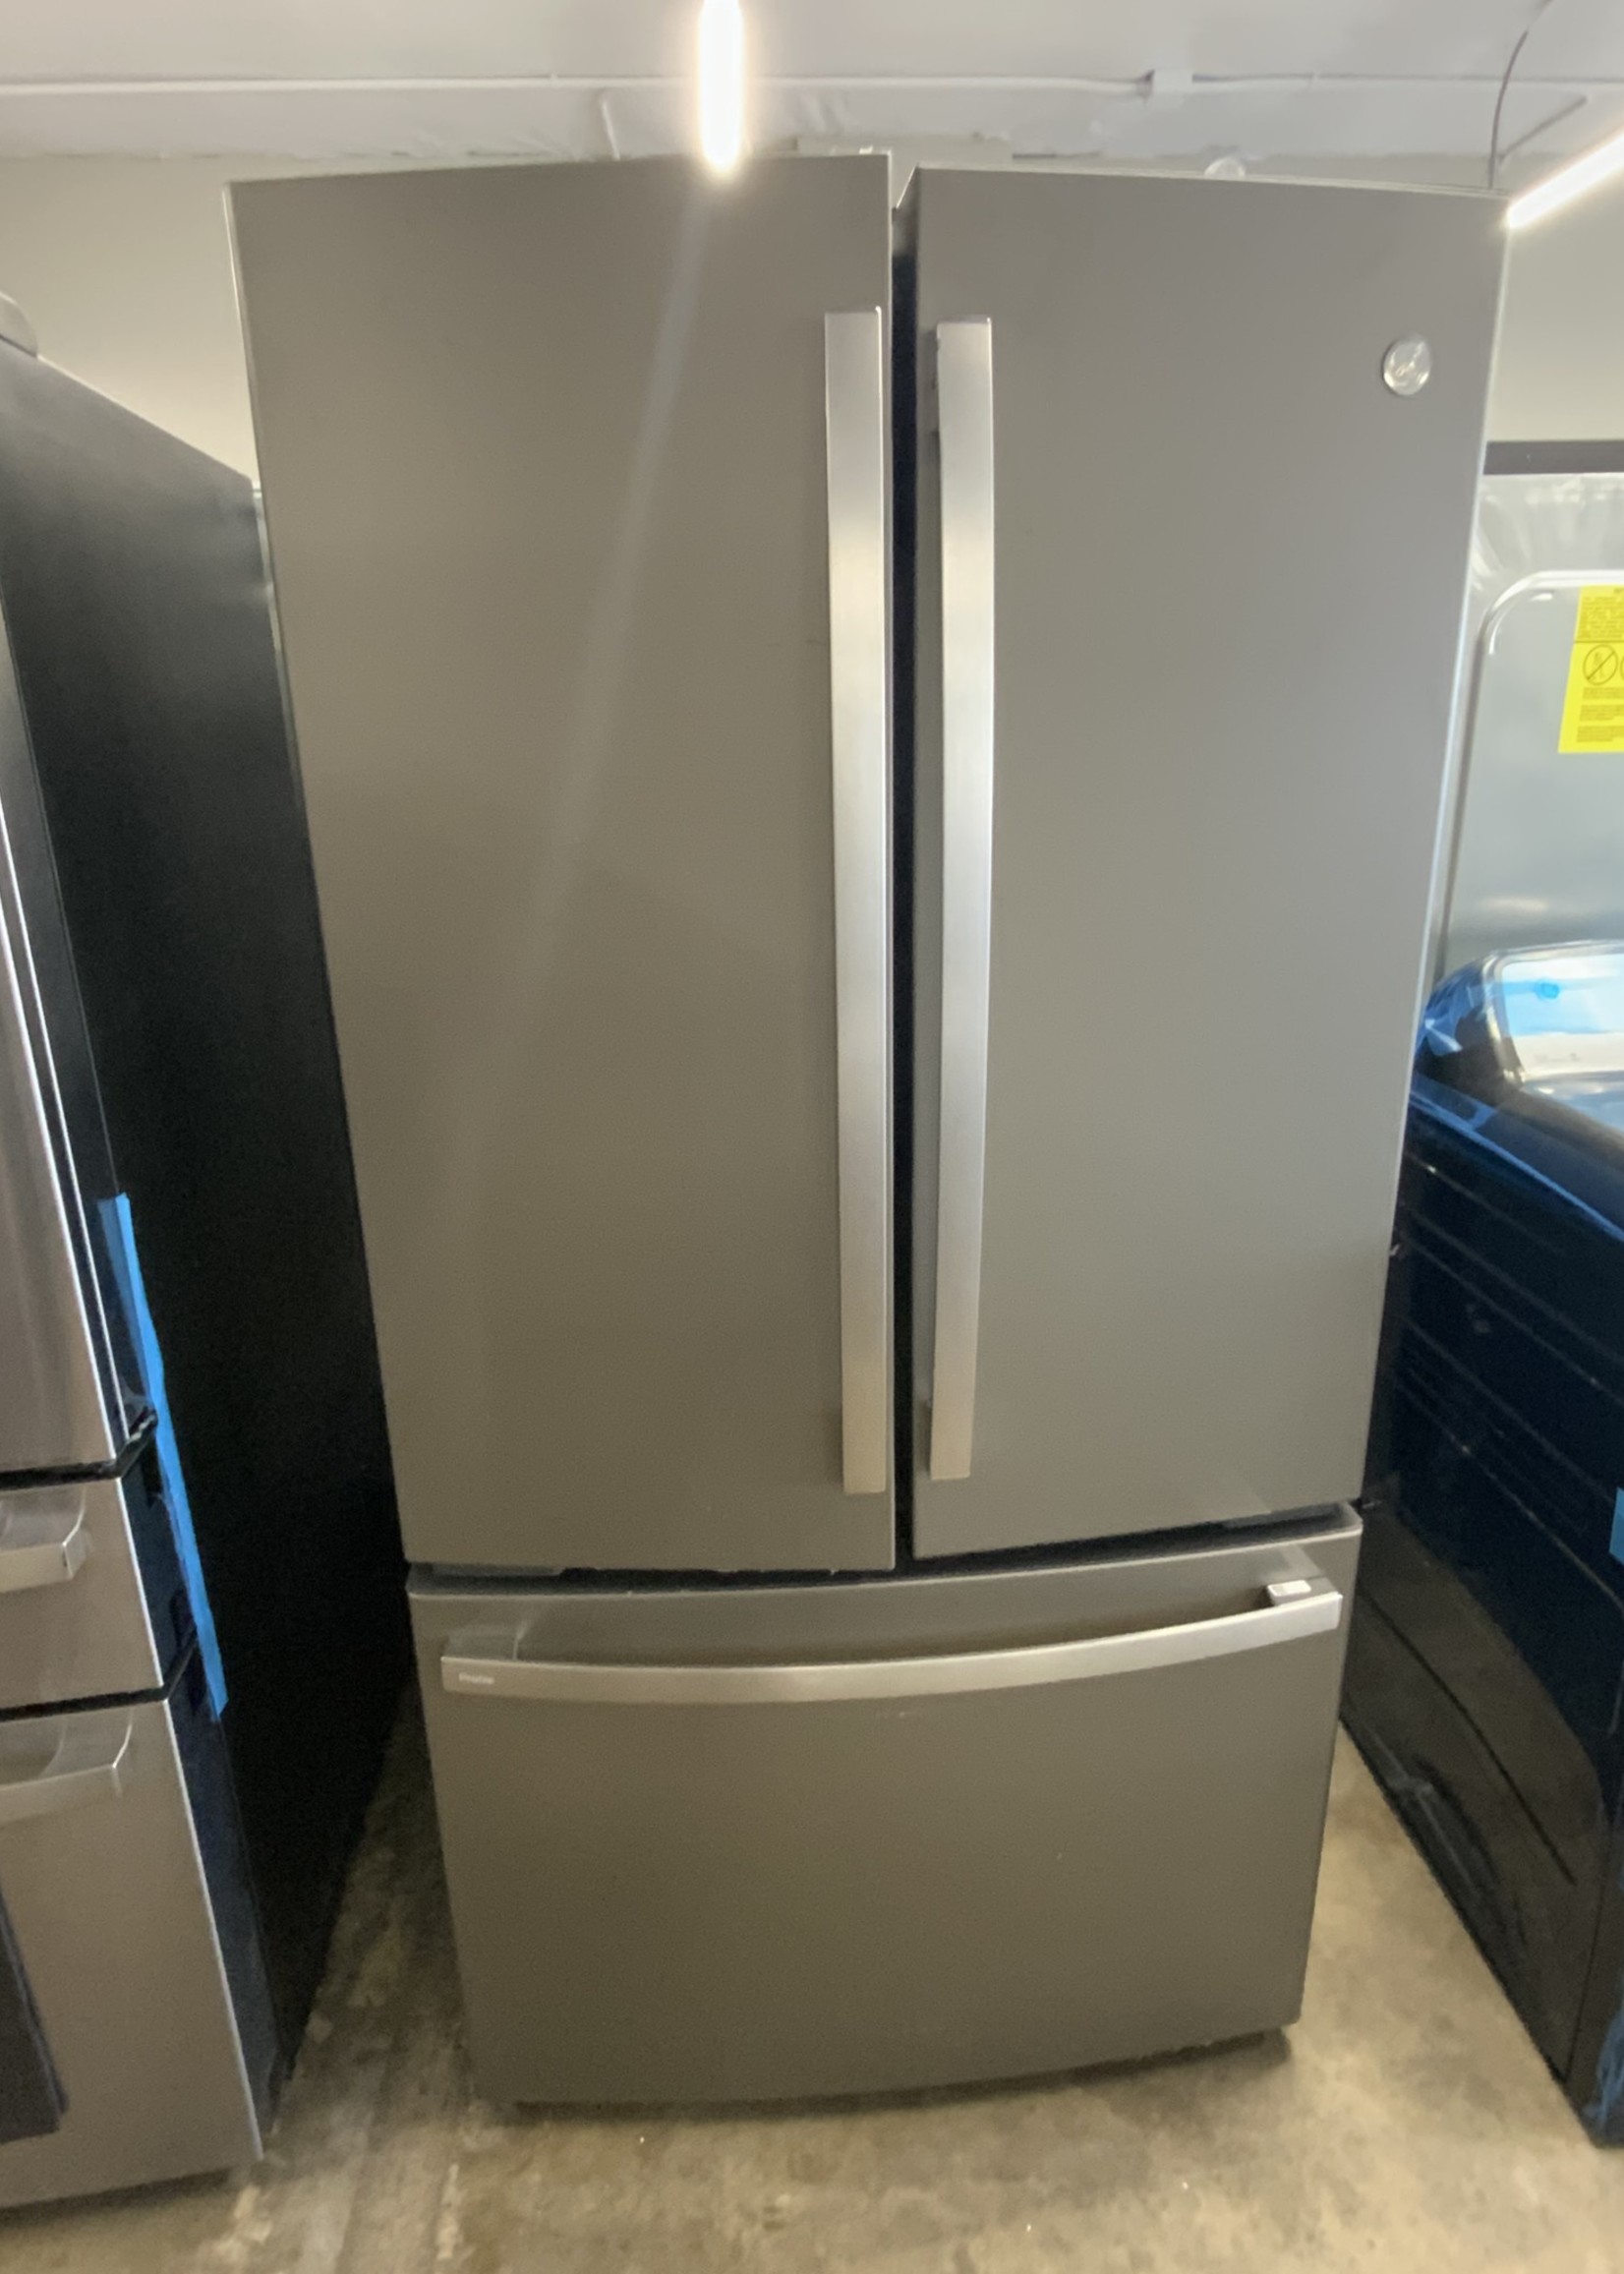 GE GE Profile 23.1 cu. ft. French Door Refrigerator in Slate, Counter Depth, Fingerprint Resistant and ENERGY STAR